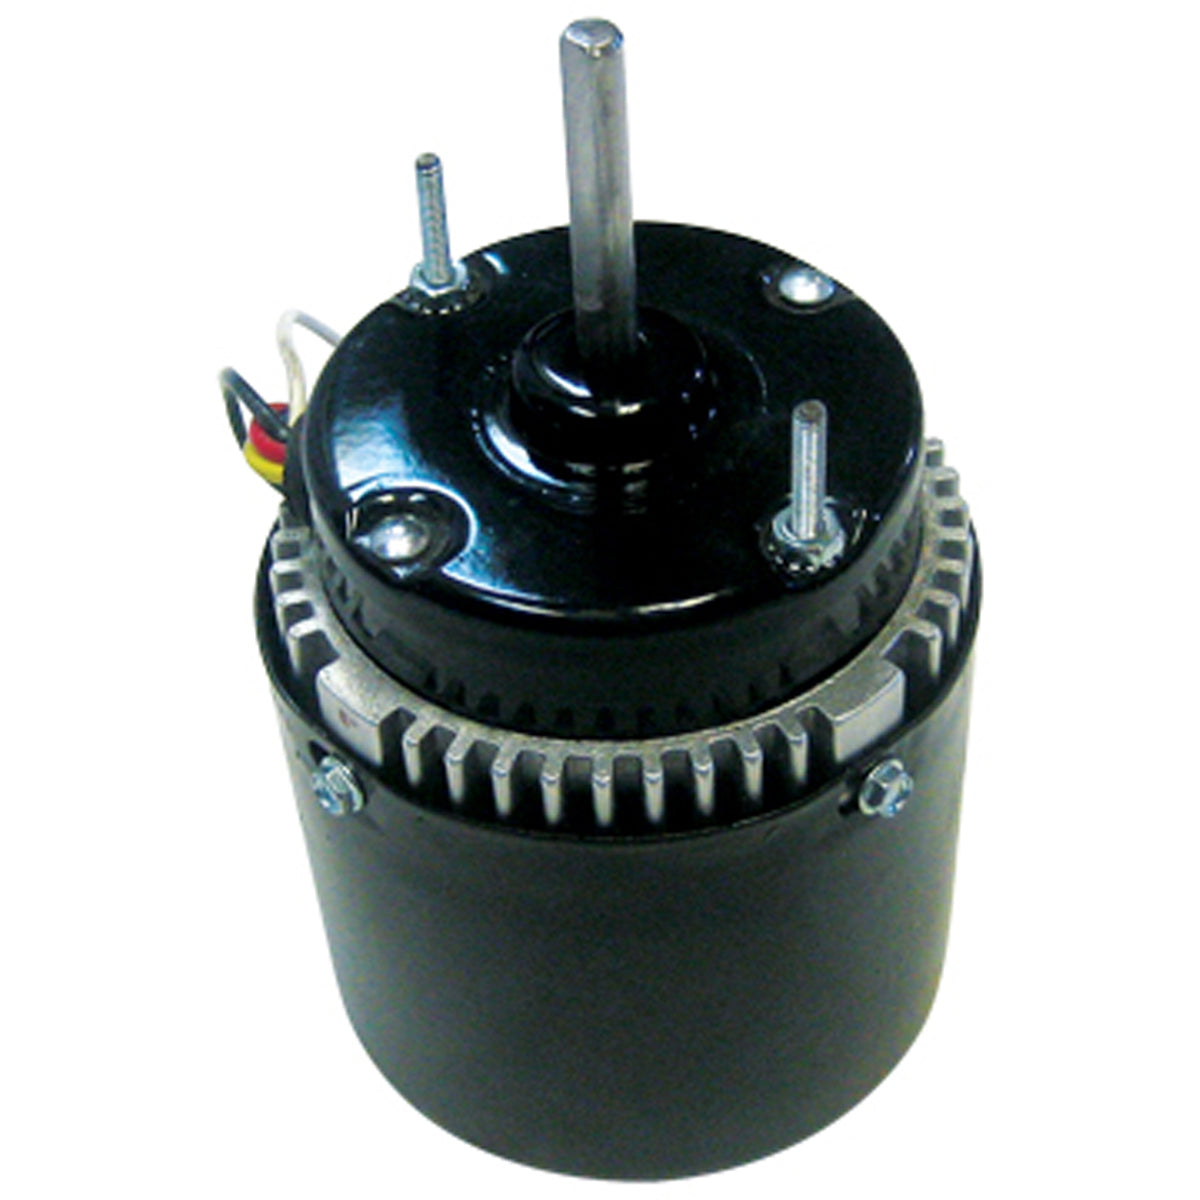 Product Image:Trimpro Bottom Motor pour Original / Rotor